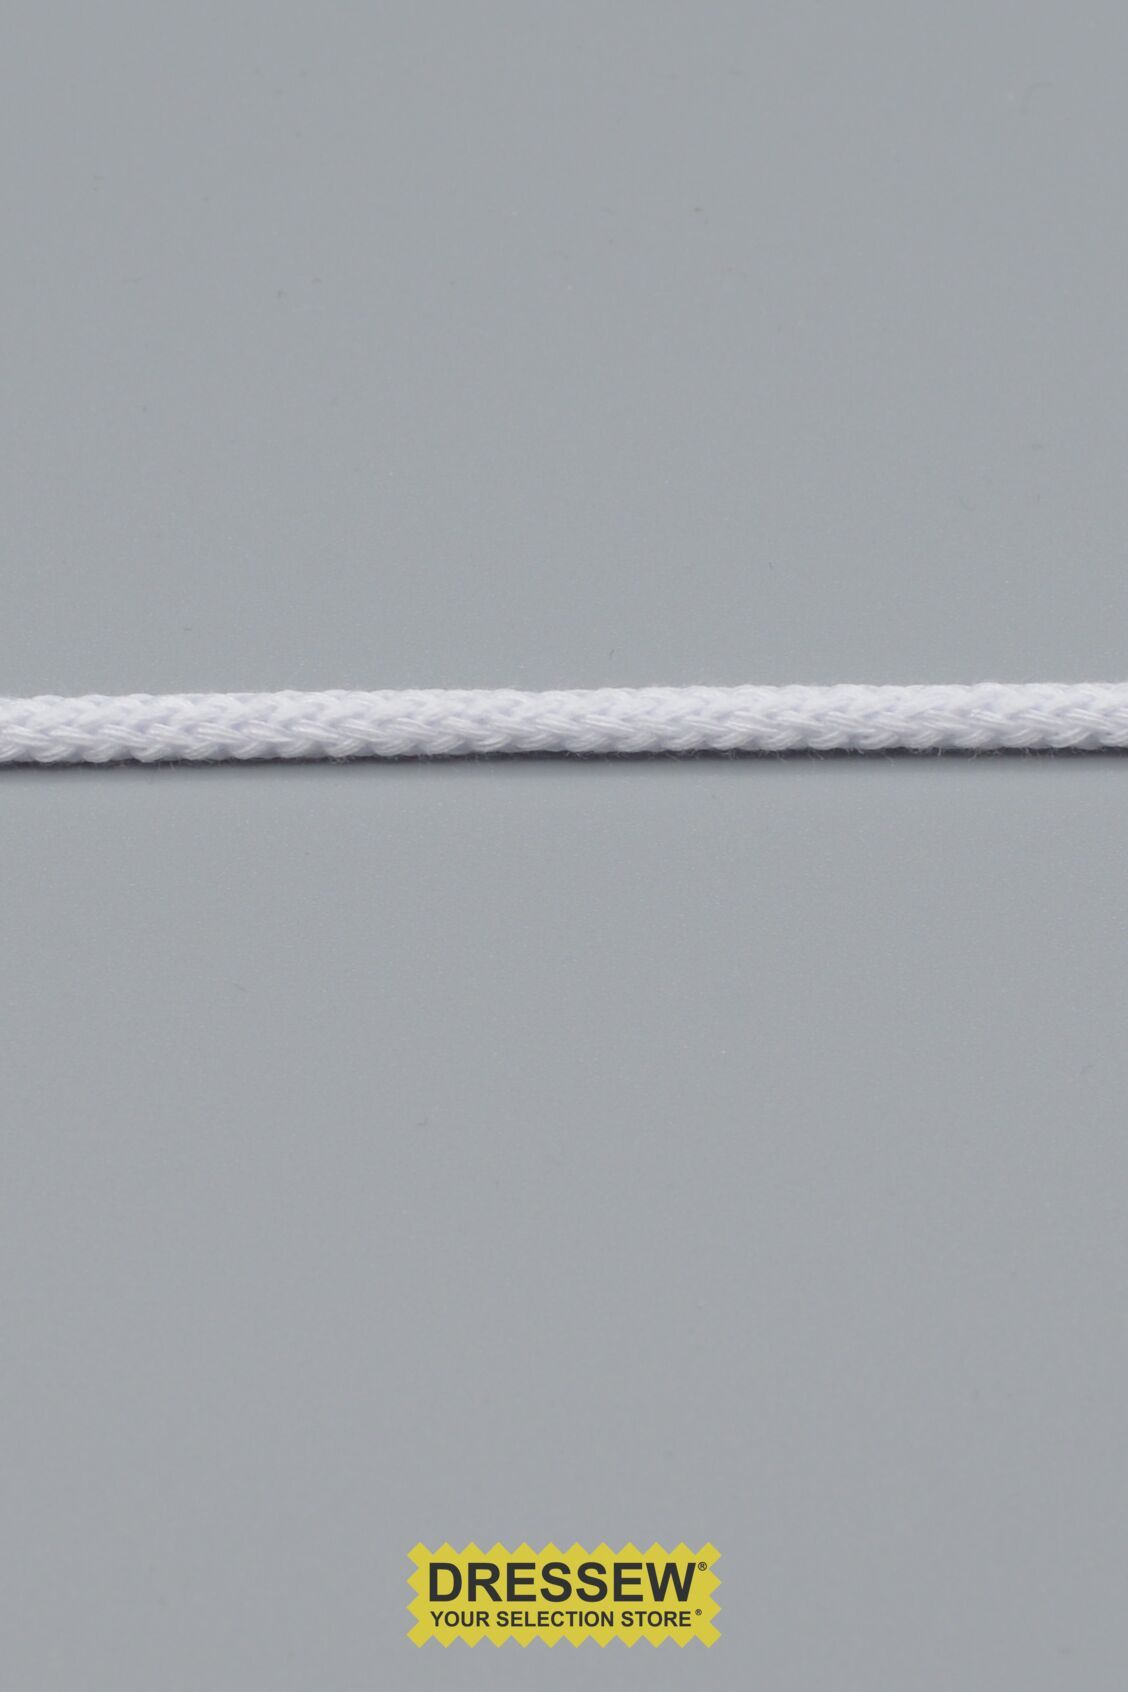 Cord 3mm (1/8") White